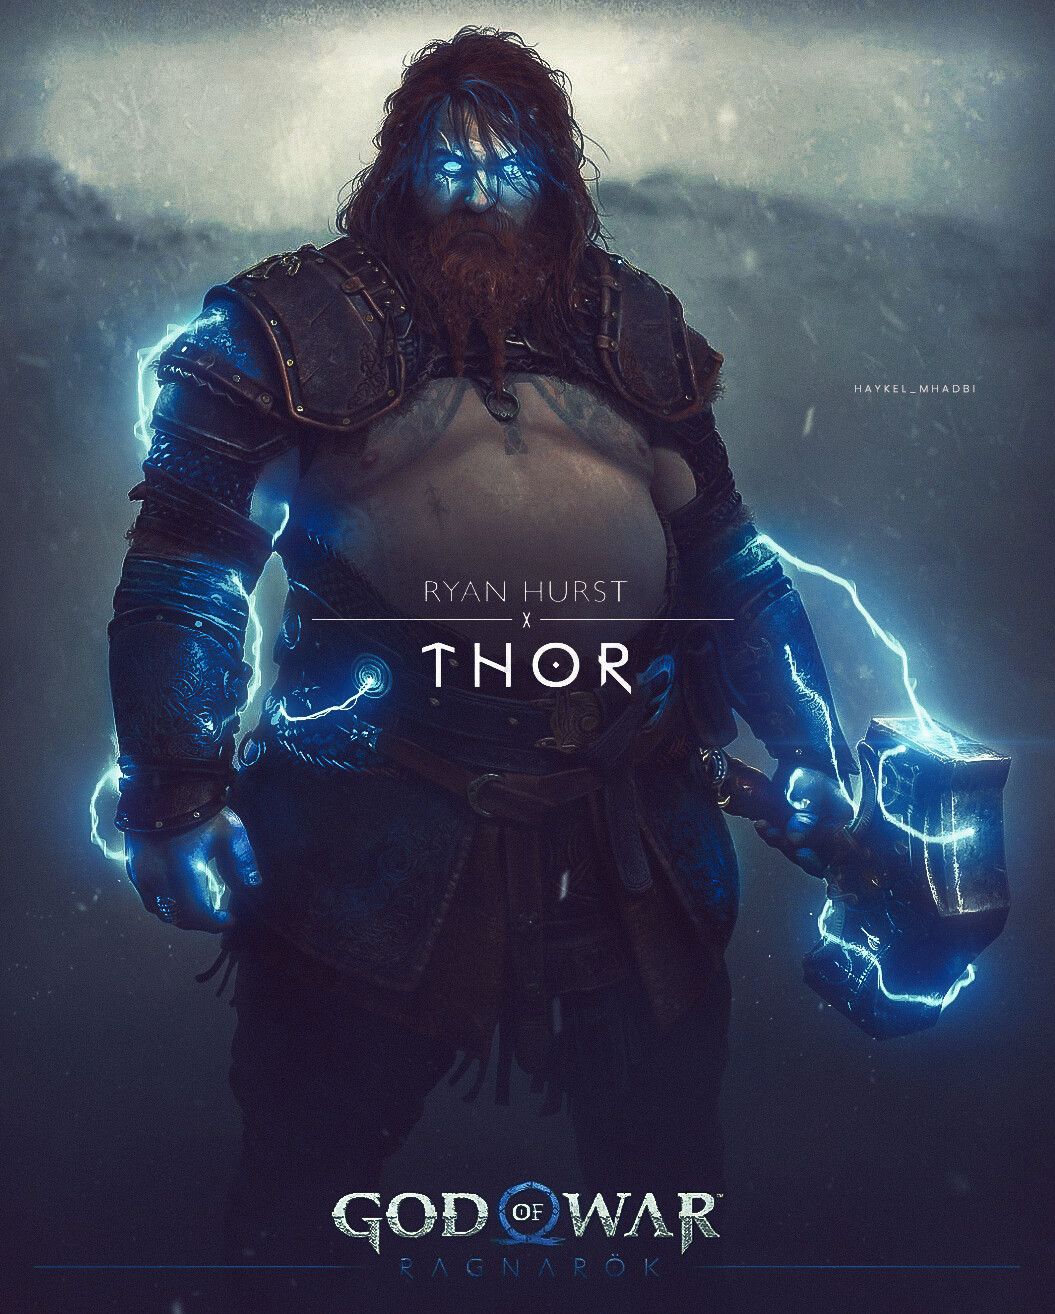 THOR: GOD OF WAR RAGNAROK by haykel mhadbi. God of war, Odin god, Thor